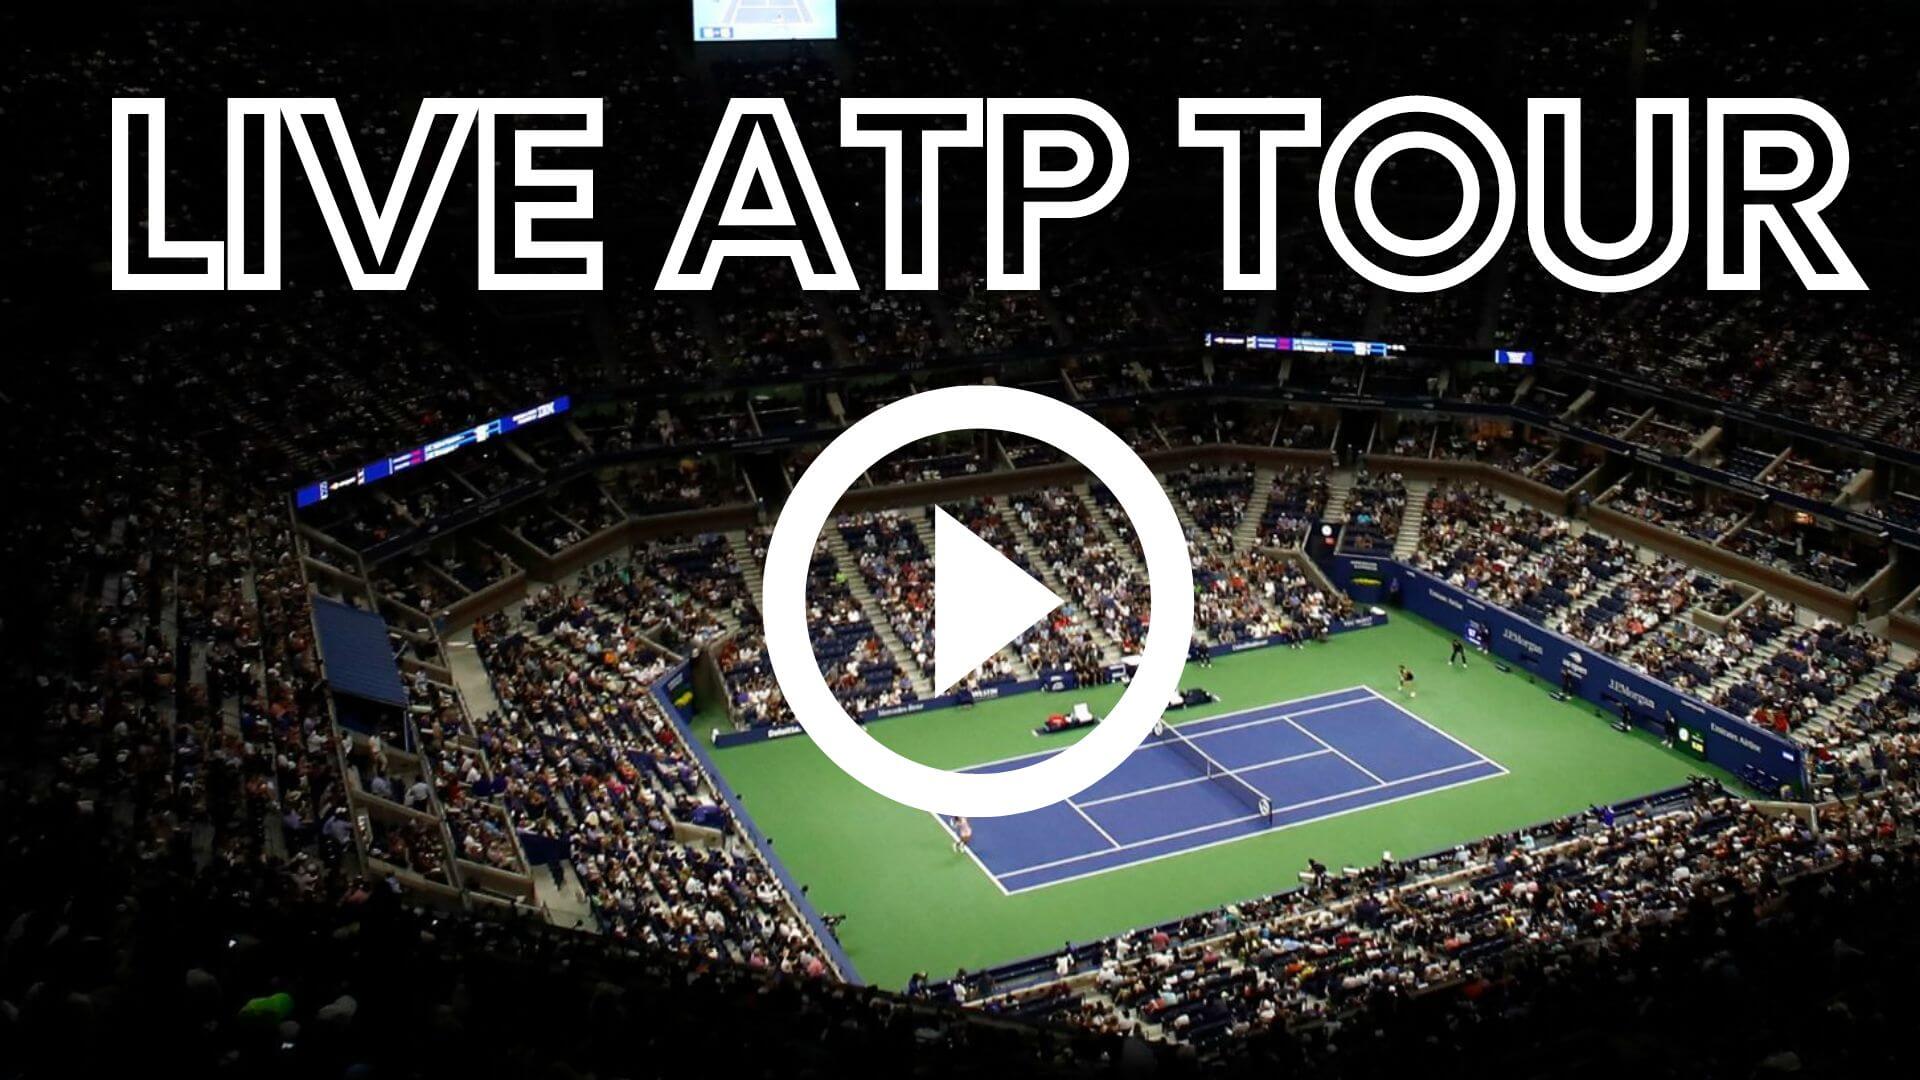 dallas-open-tennis-live-stream-atp-tour-250